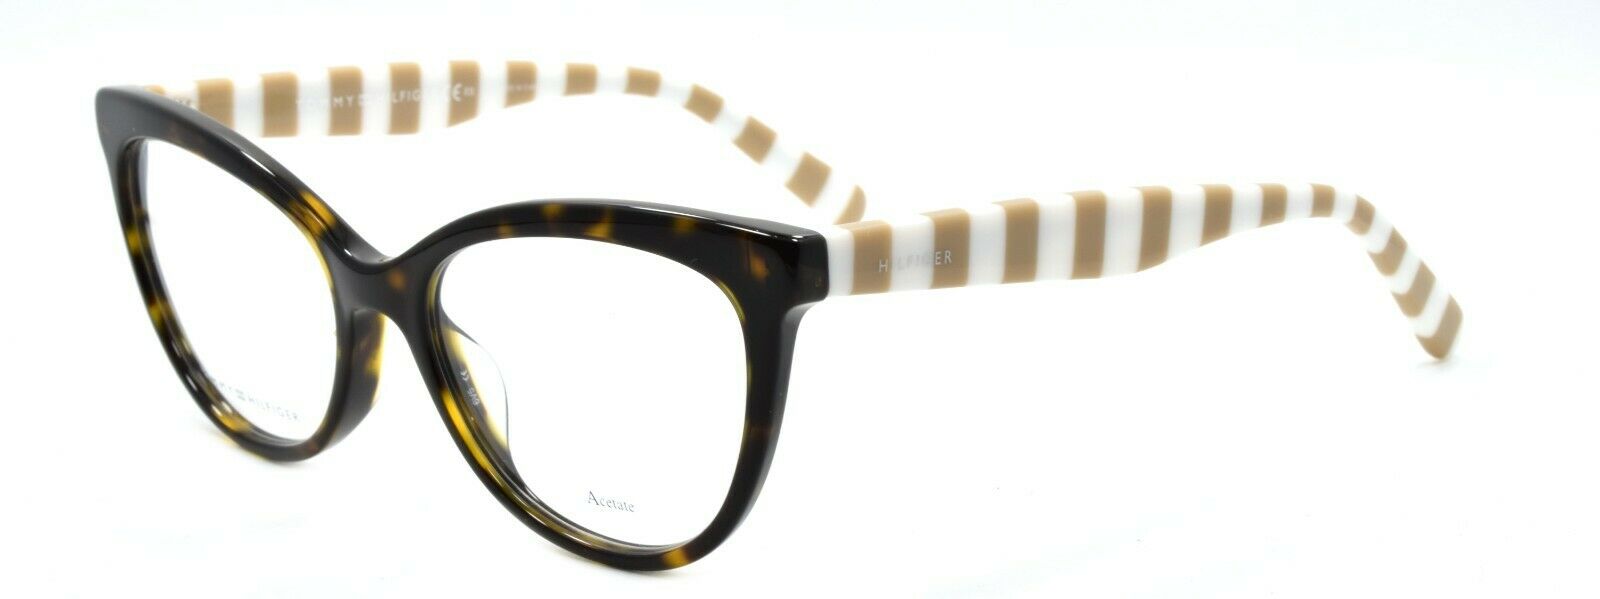 1-TOMMY HILFIGER TH 1481 9N4 Women's Eyeglasses Frames 52-17-140 Havana / Stripes-762753617576-IKSpecs